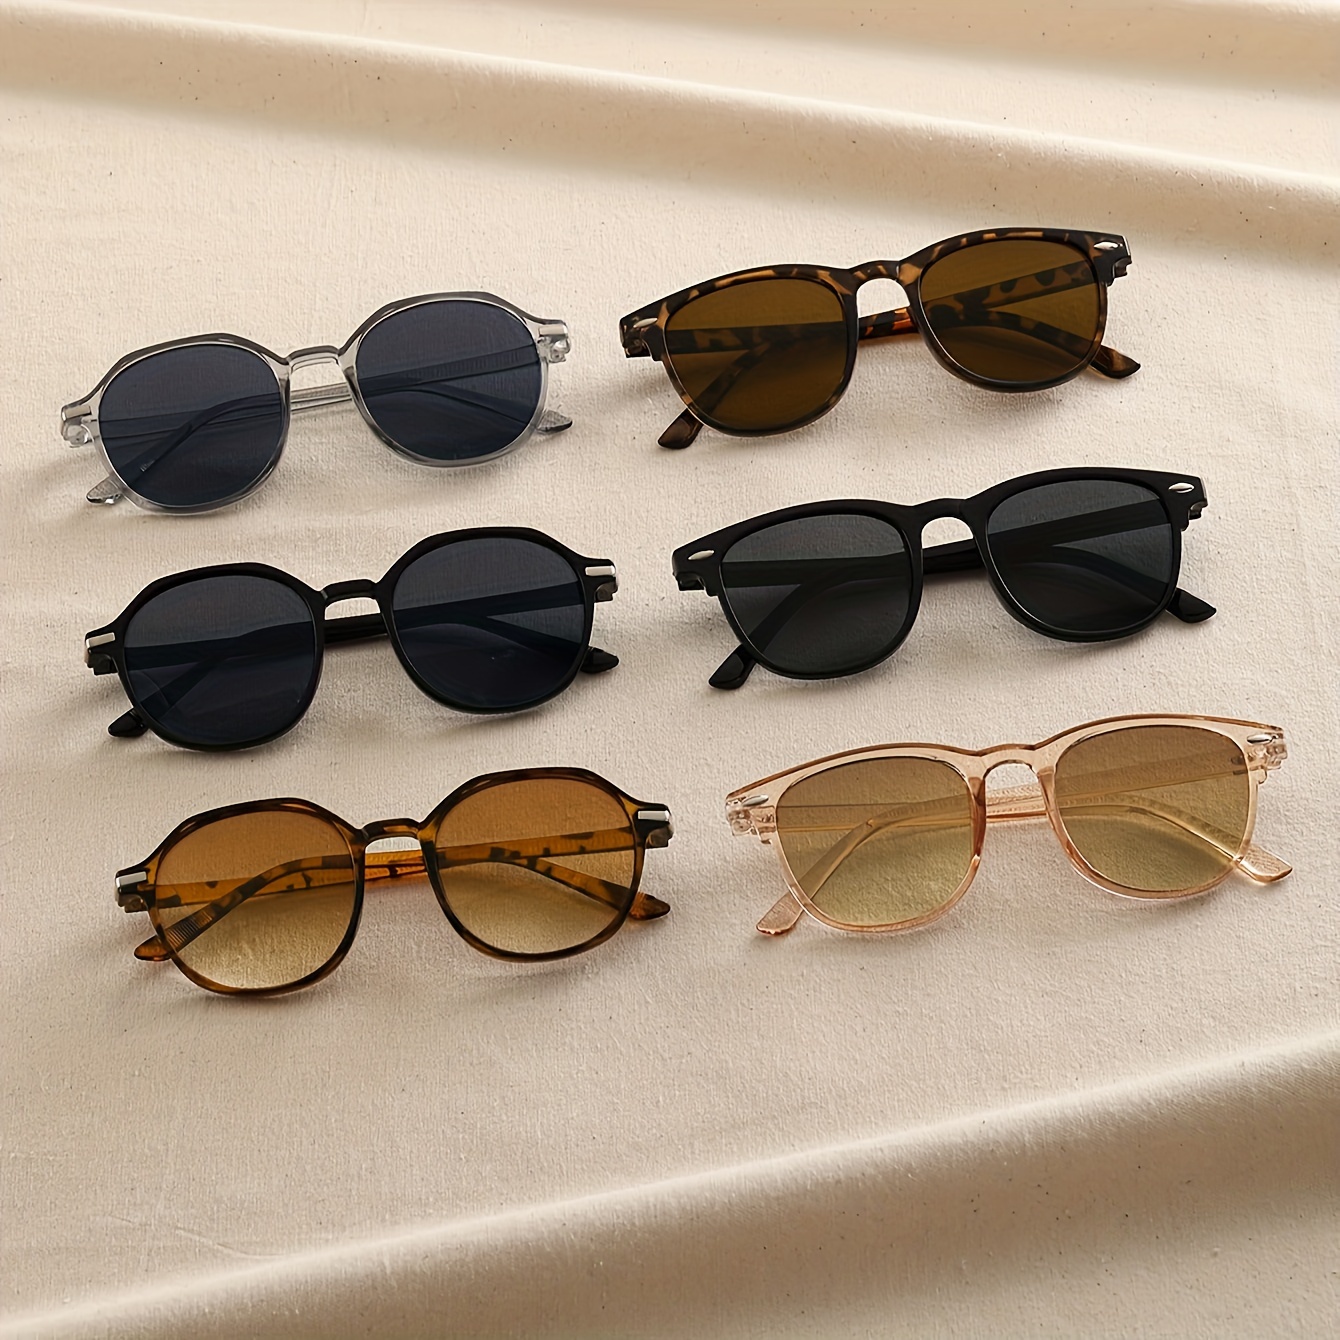 

6pcs Oval Fashion For Women Men Retro Gradient Sun Shades For Travel Beach Party Fashion Glasses